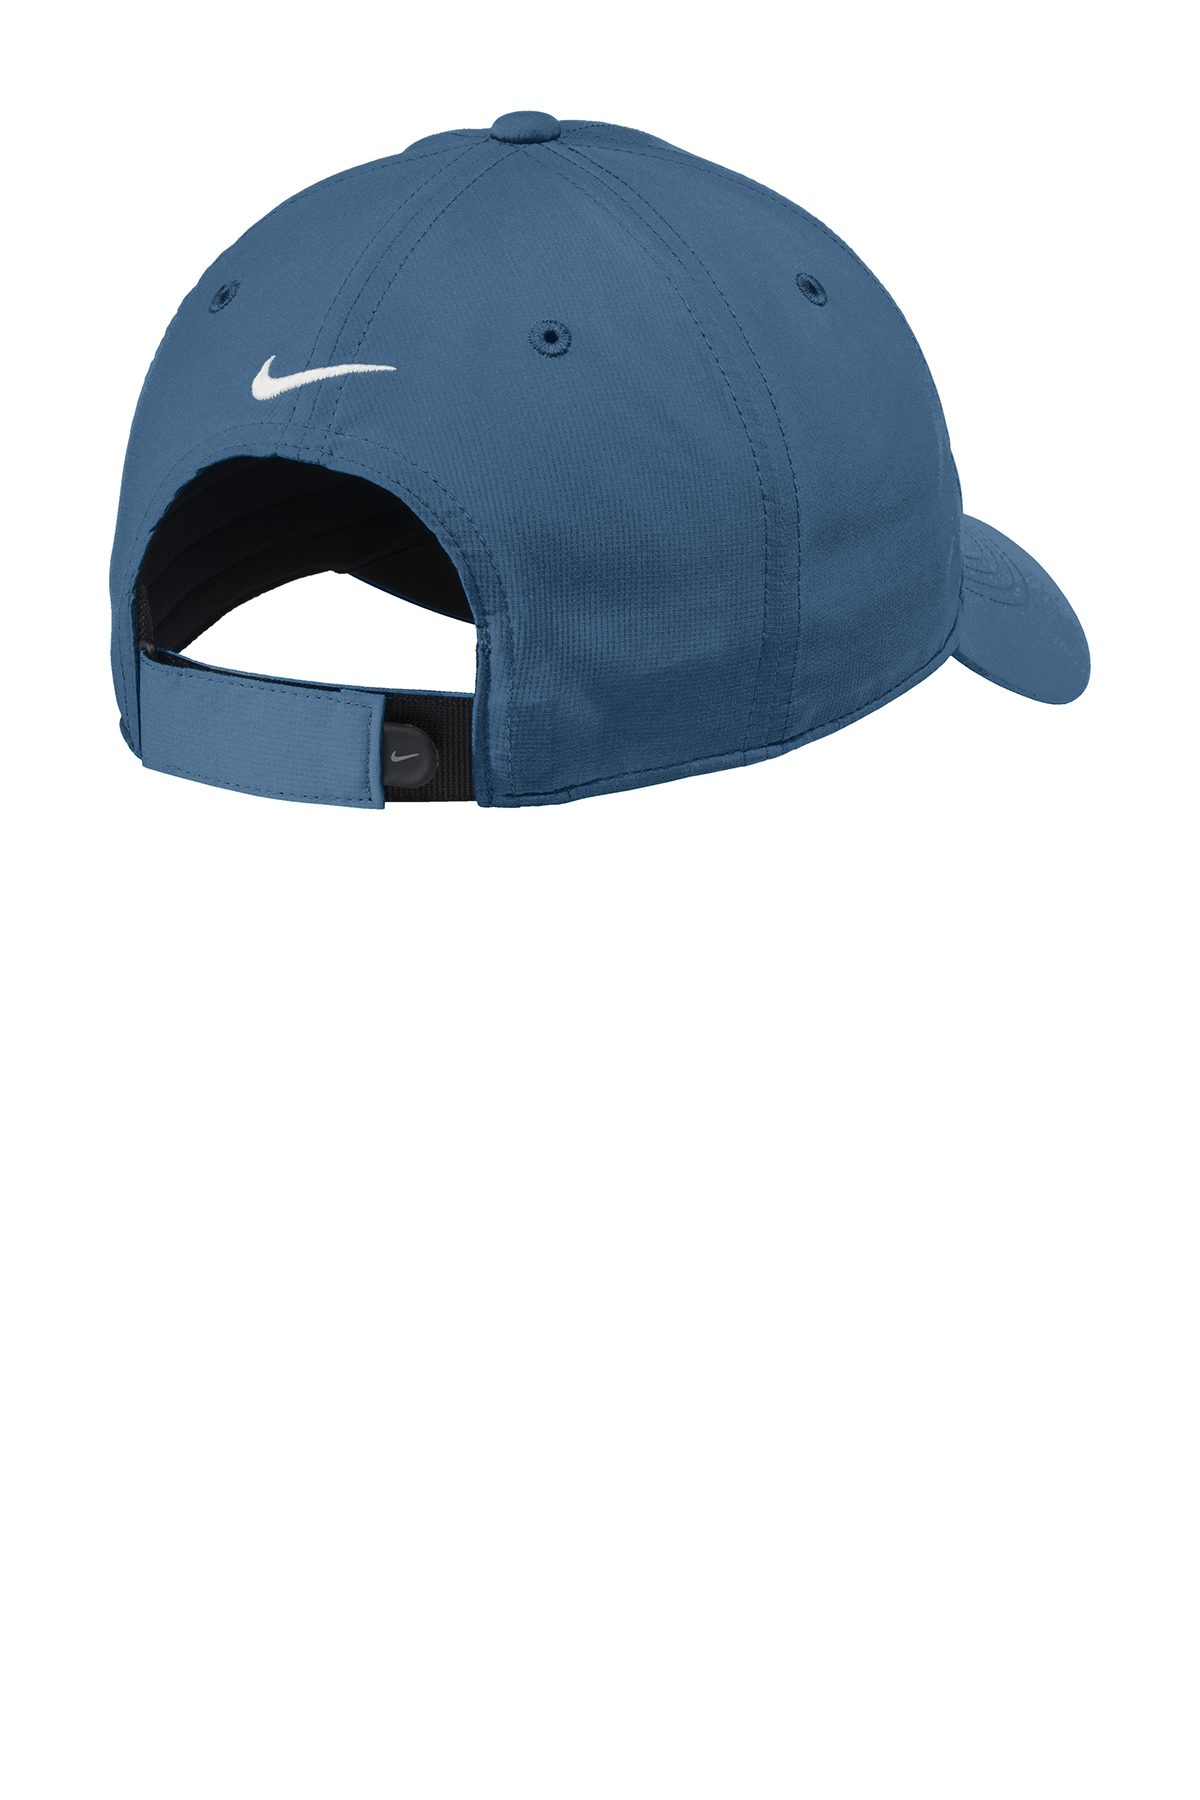 Nike Dri-FIT Tech Cap | Product | SanMar